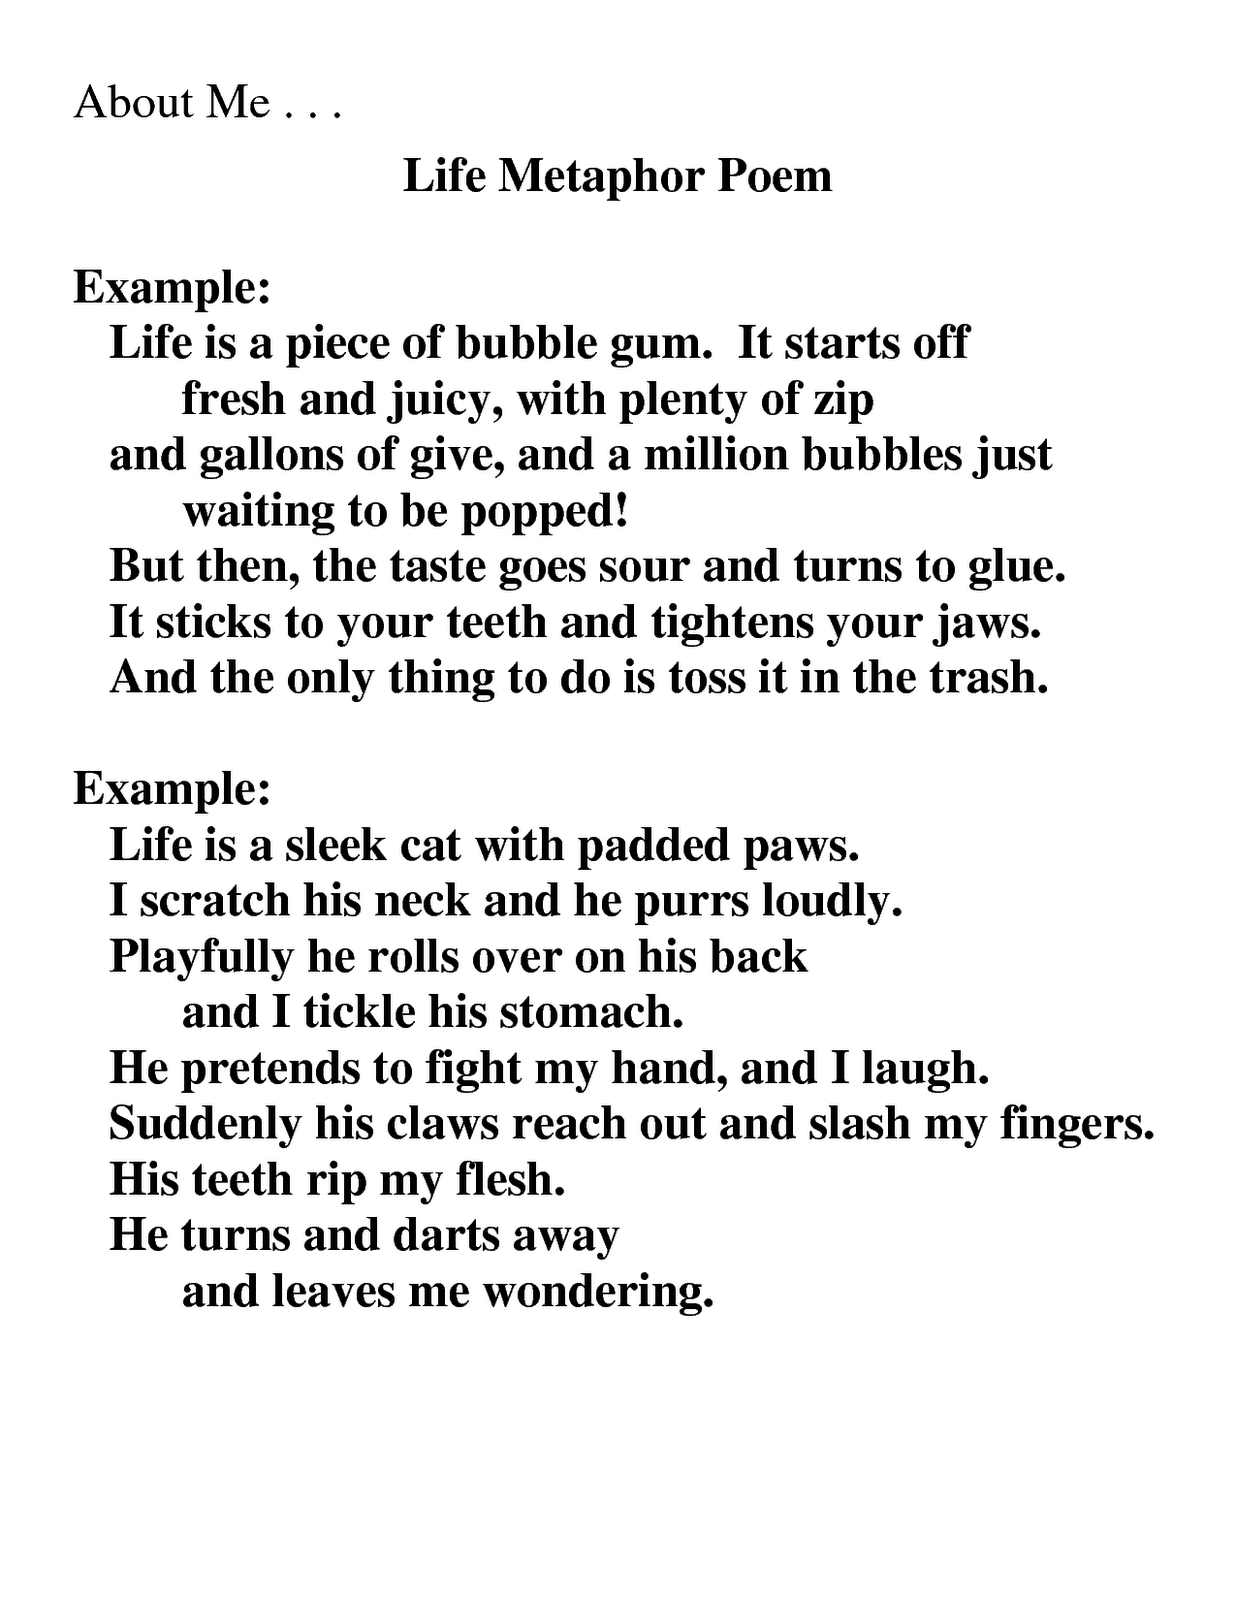 Extended Metaphor Poem Examples